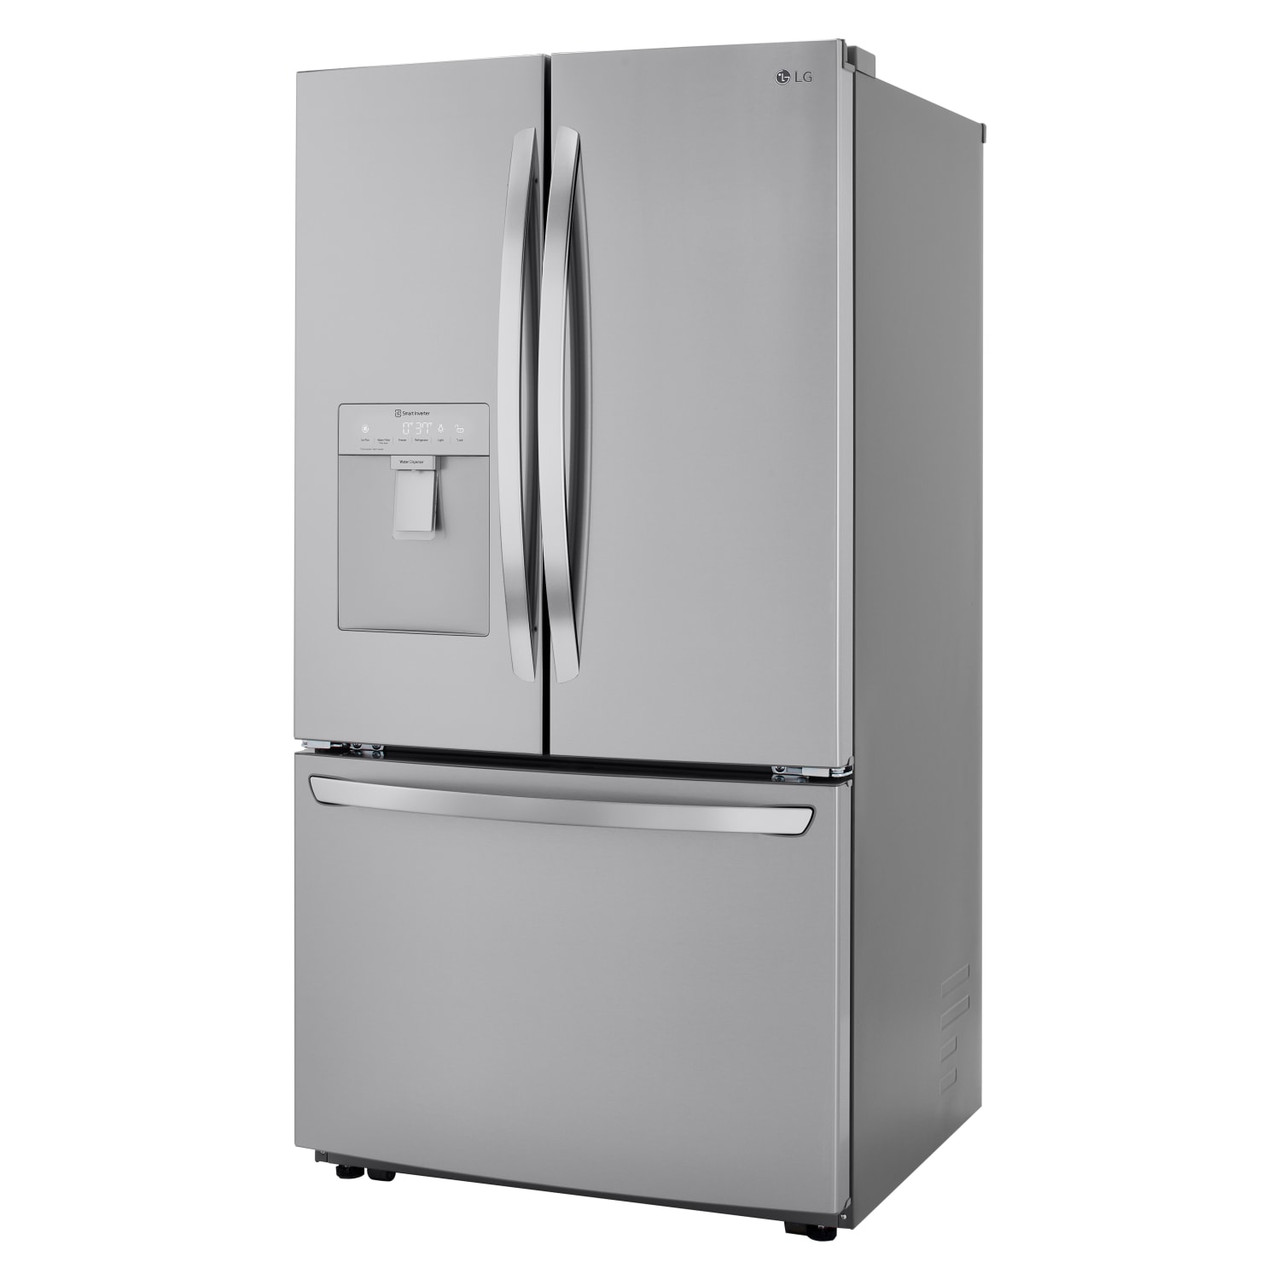 LG 29 cu. ft. French Door Refrigerator with Slim Design Water Dispenser - LRFWS2906S